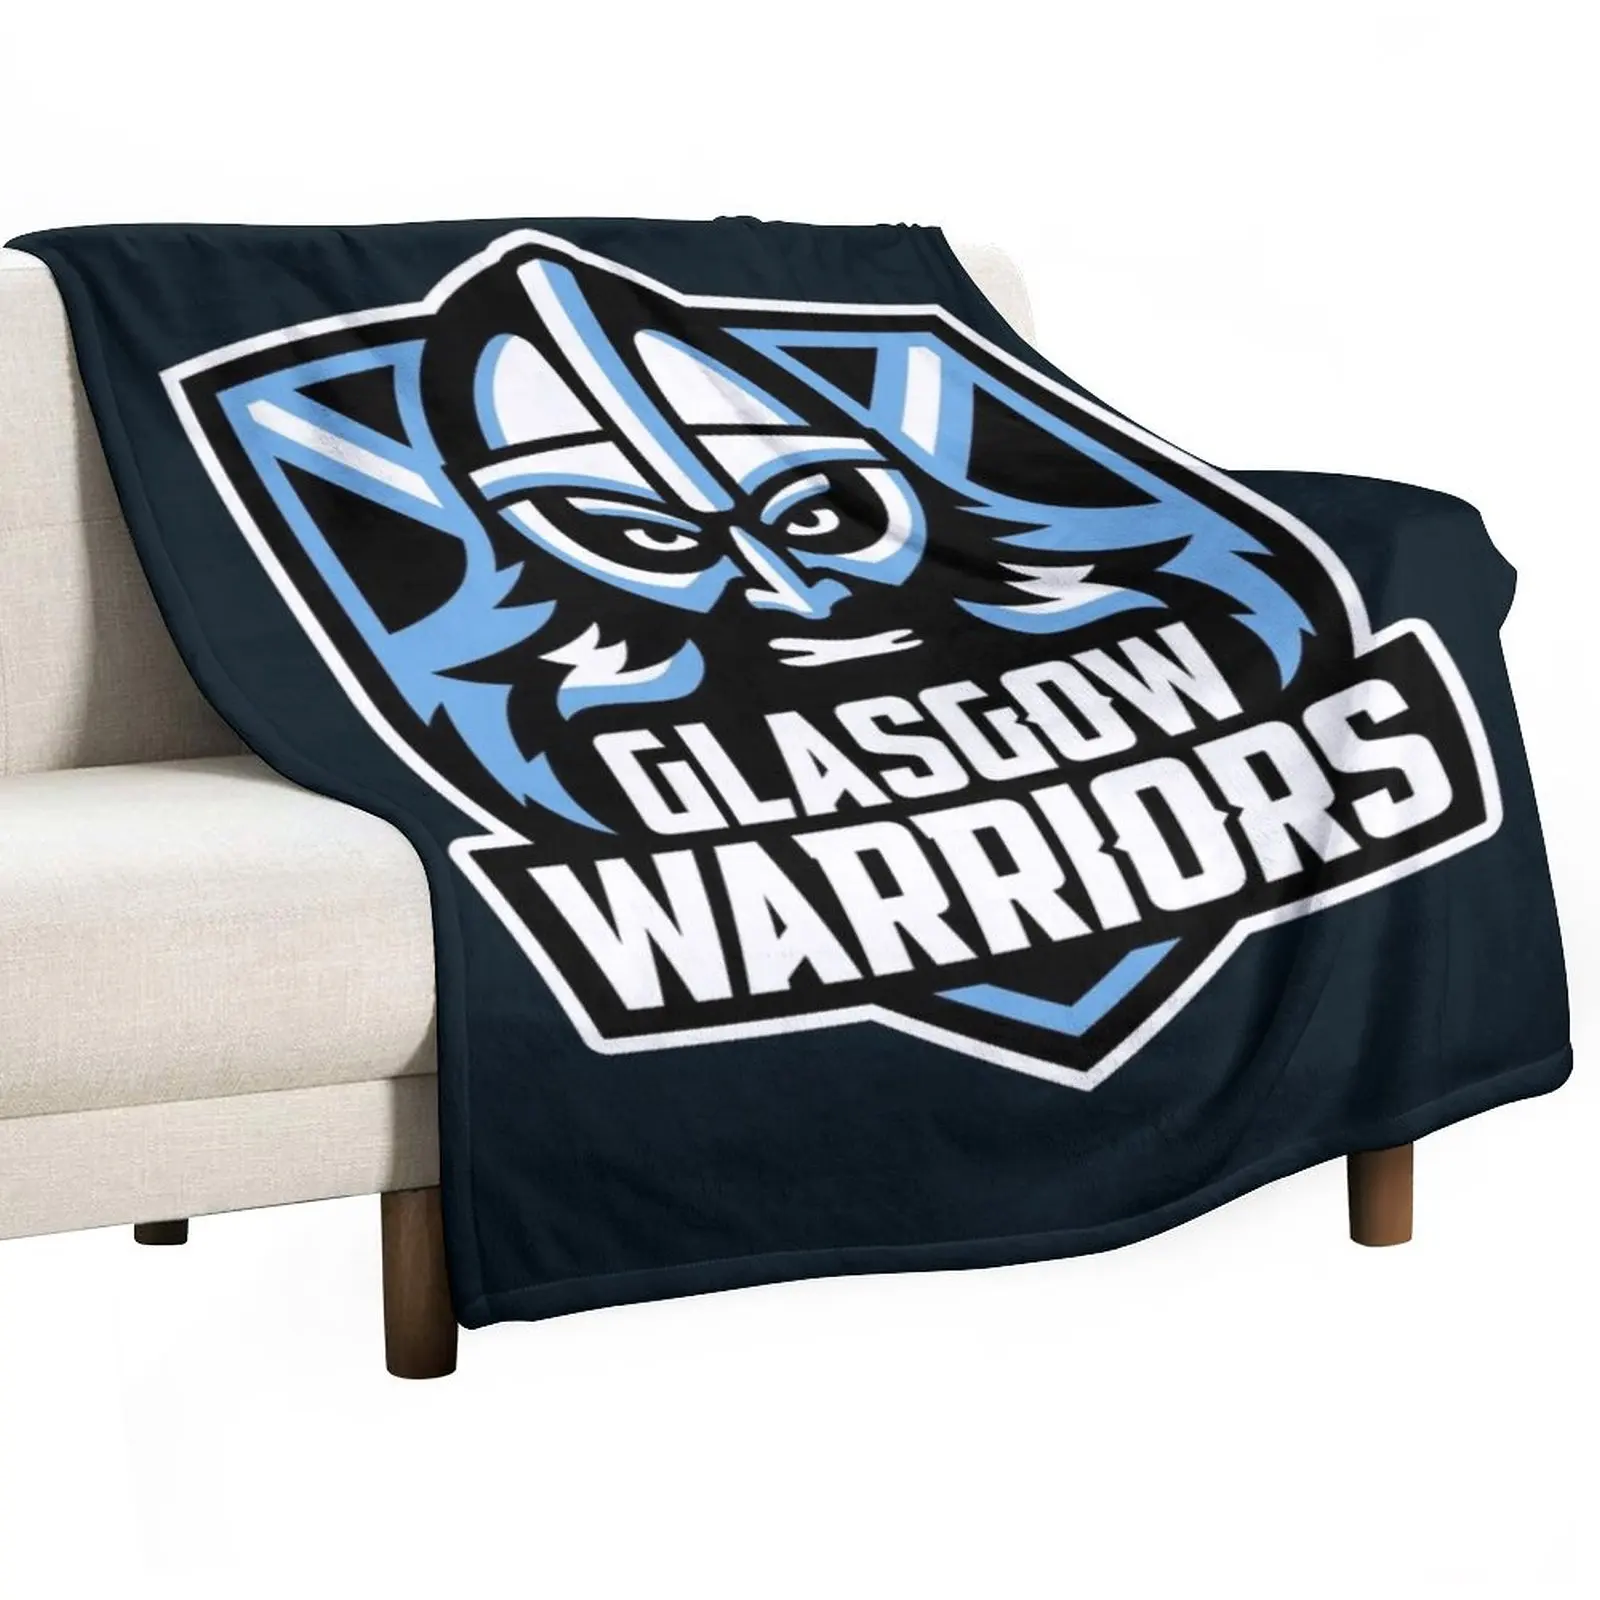 

Glasgow Warriors Throw Blanket decorative Sofa Sofas Fluffys Large Blankets